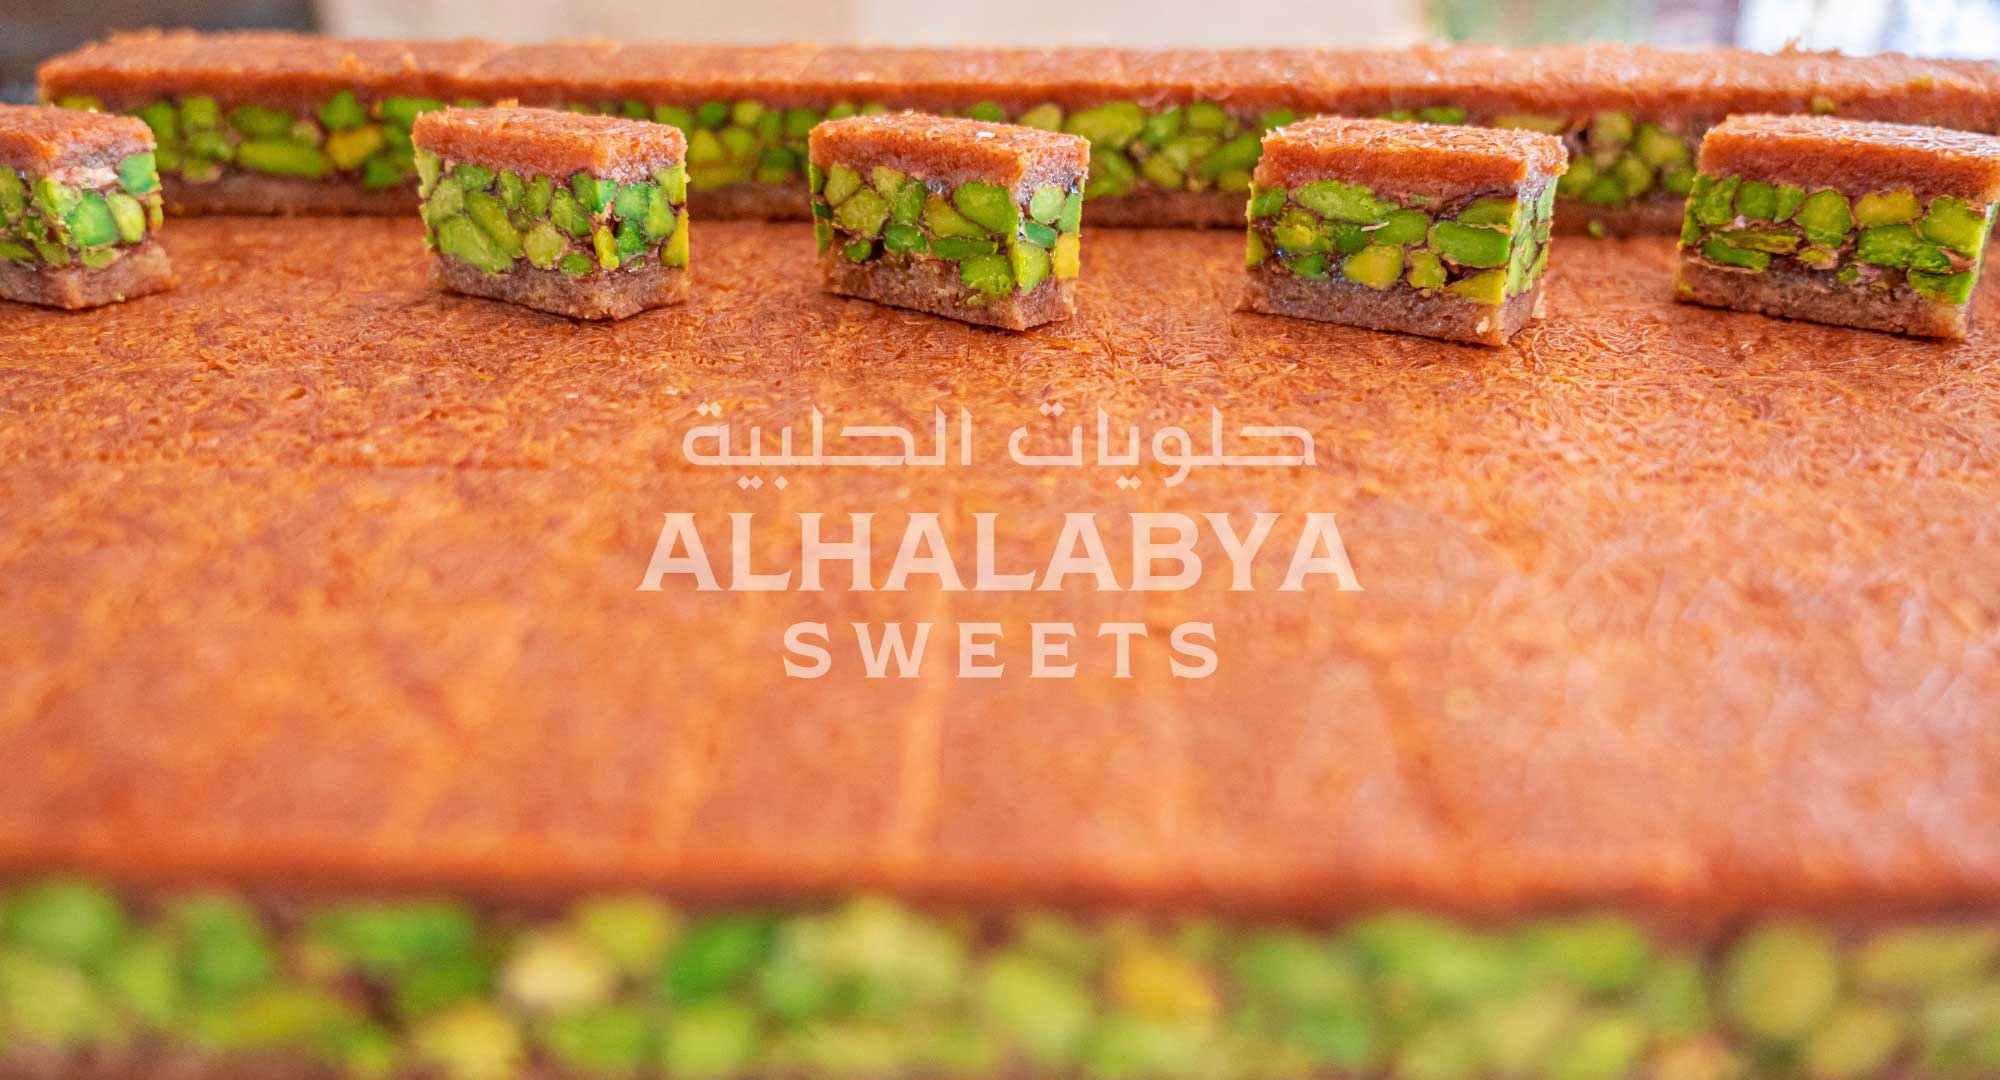 Signature Baklava Varieties at Al Halabya Sweets